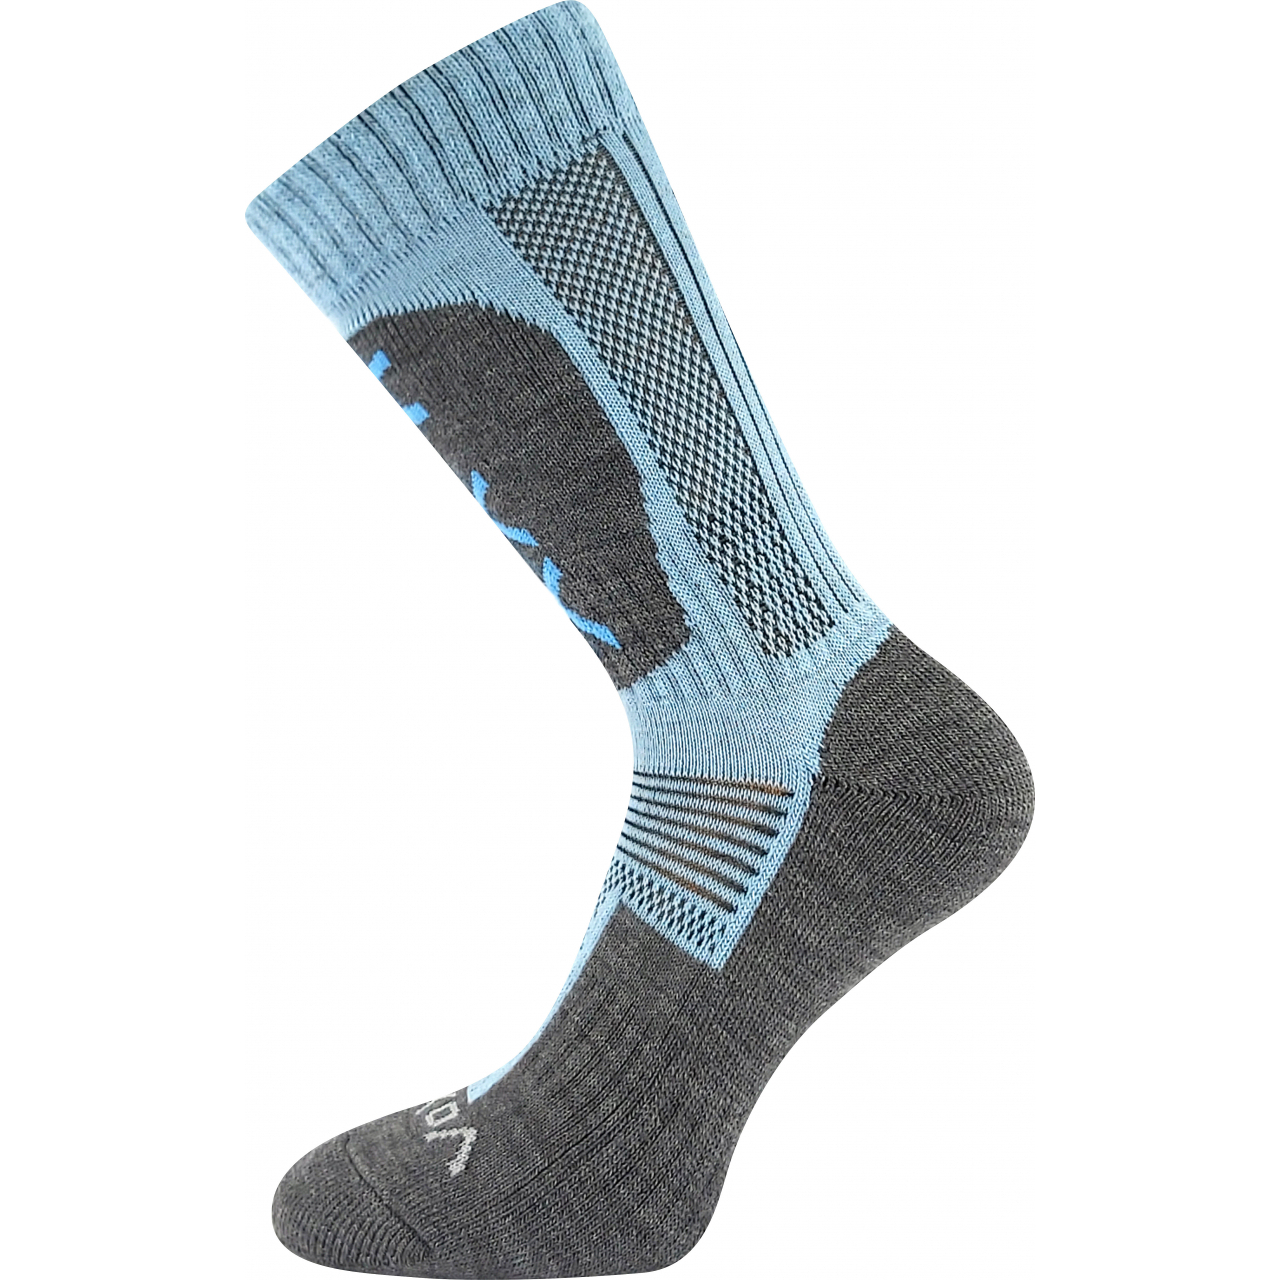 Ponožky unisex silné Voxx Nordick - modré, 43-46